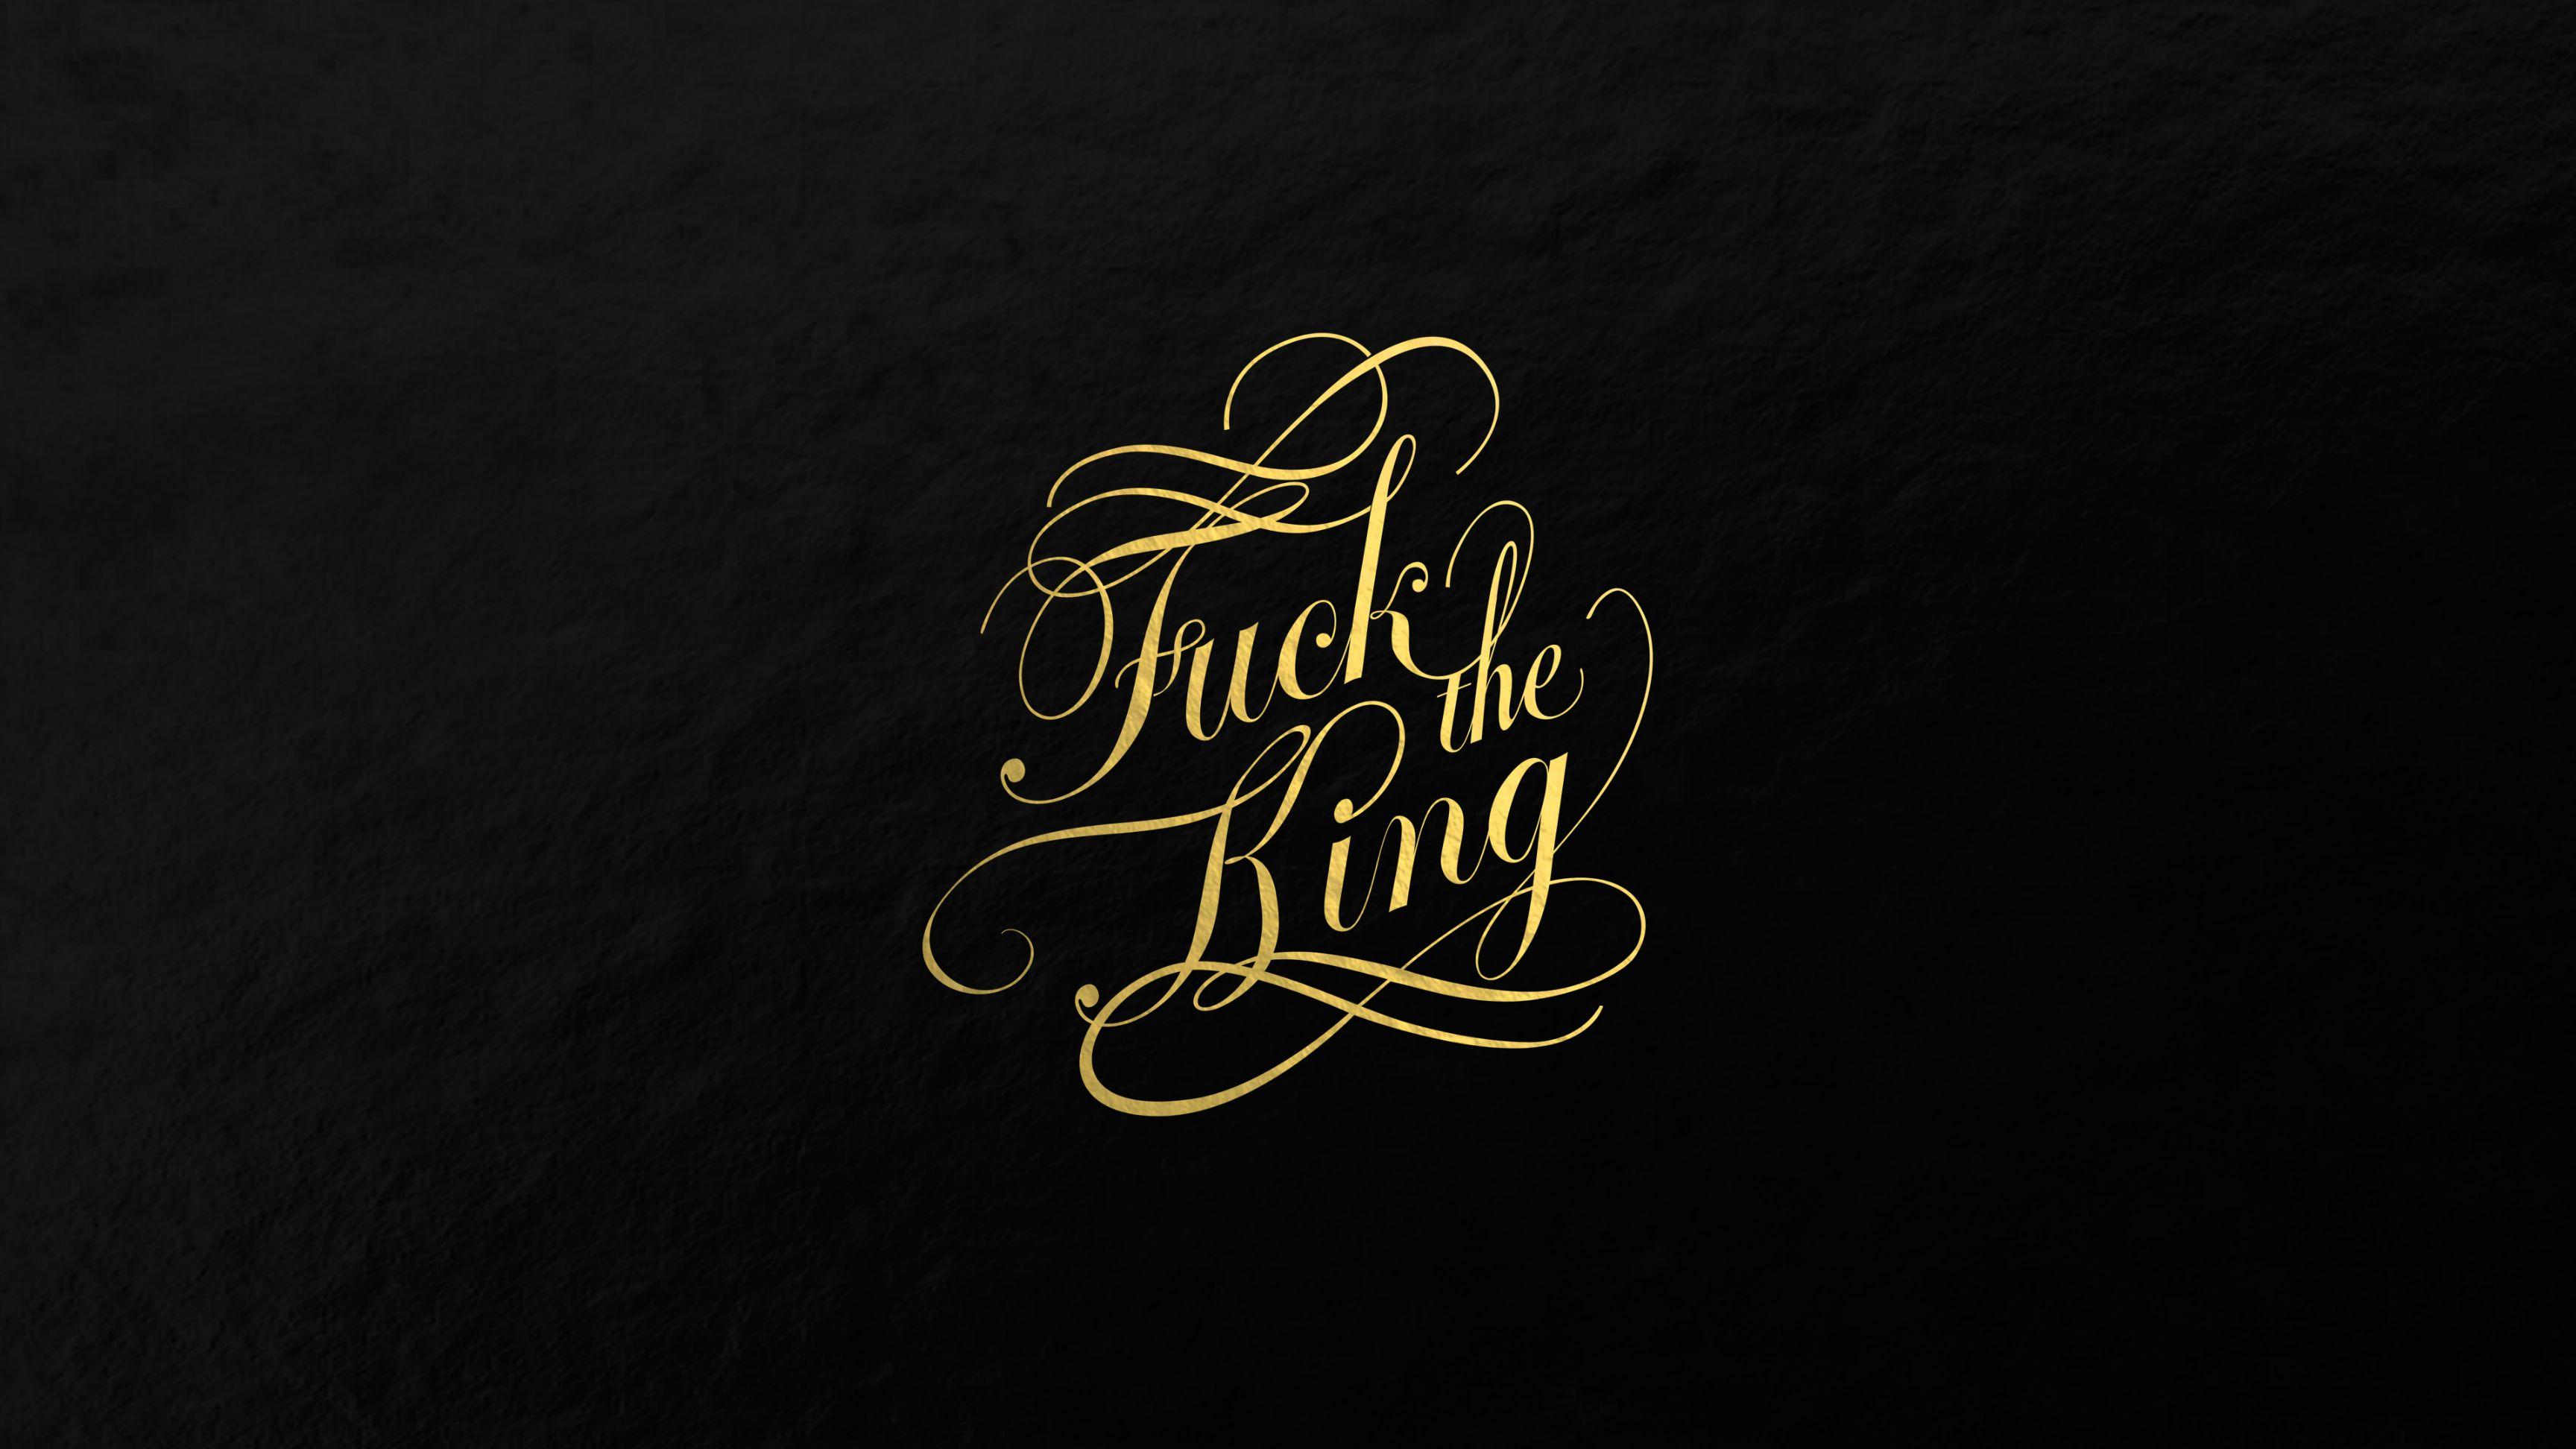 100+] King Logo Wallpapers | Wallpapers.com